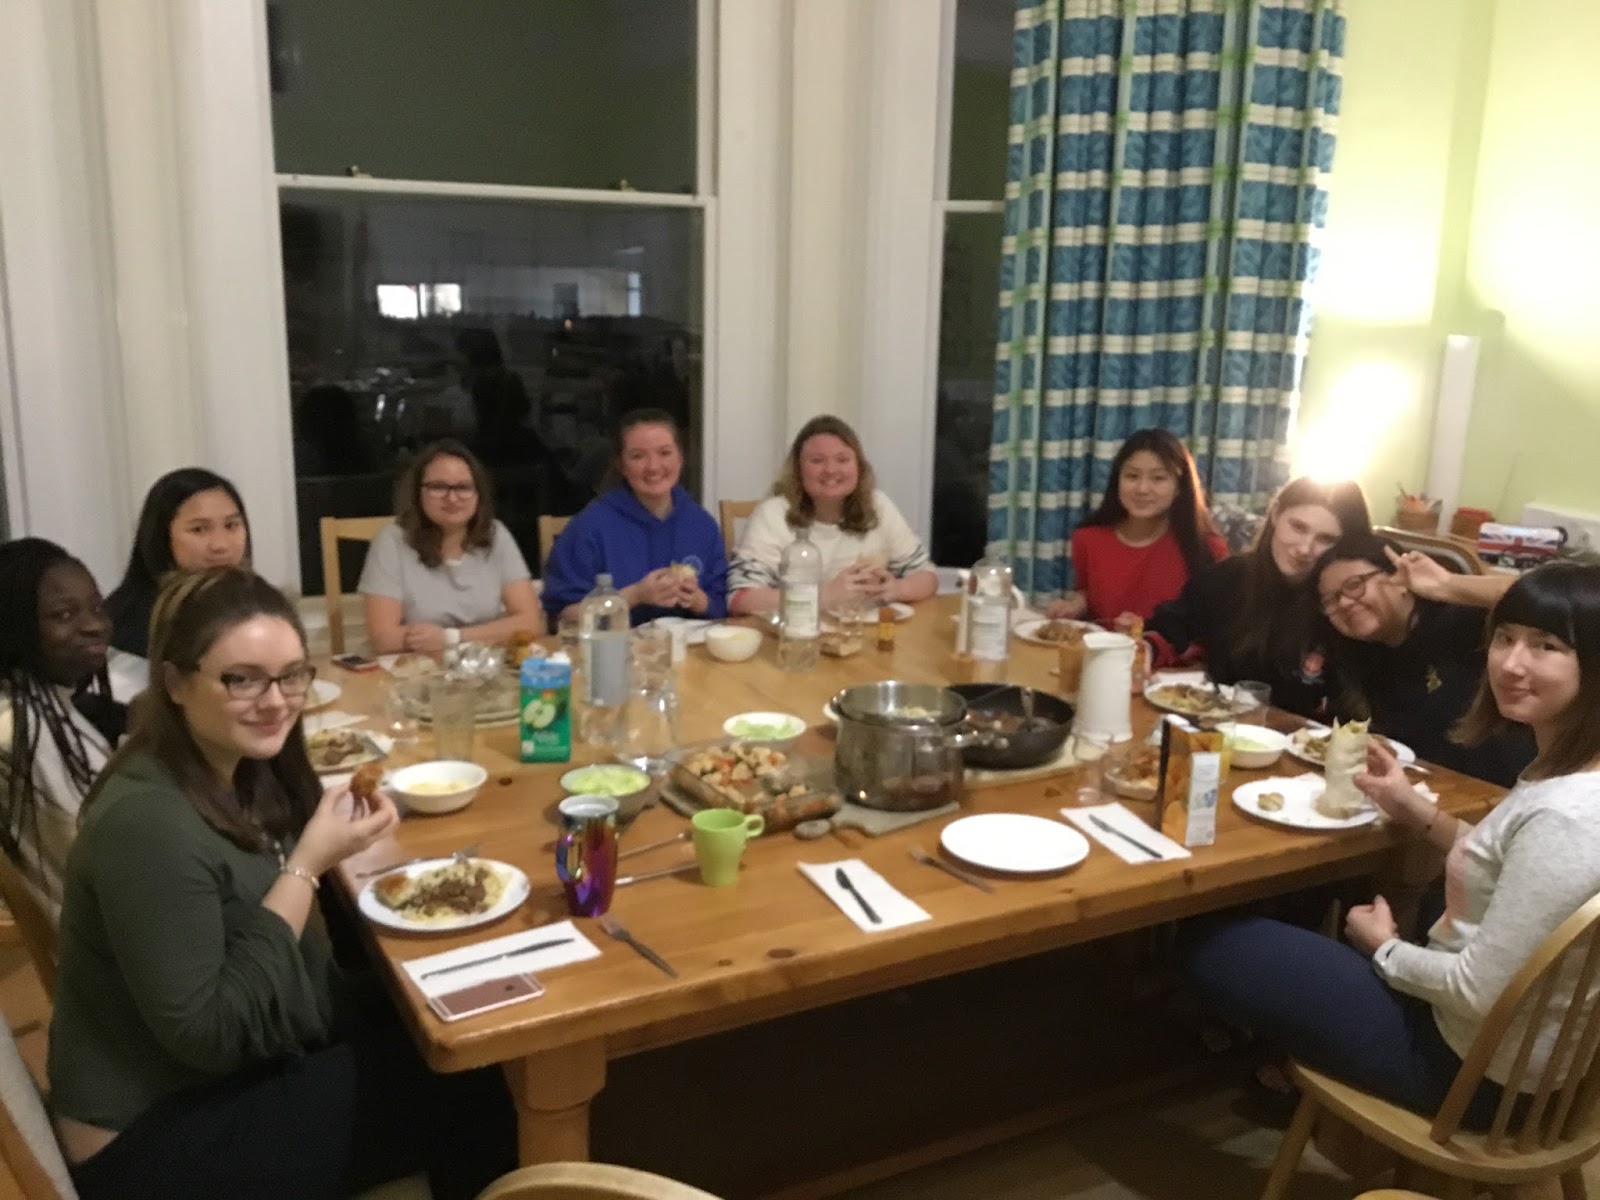 Summerhill House Blog: Saturday night meal